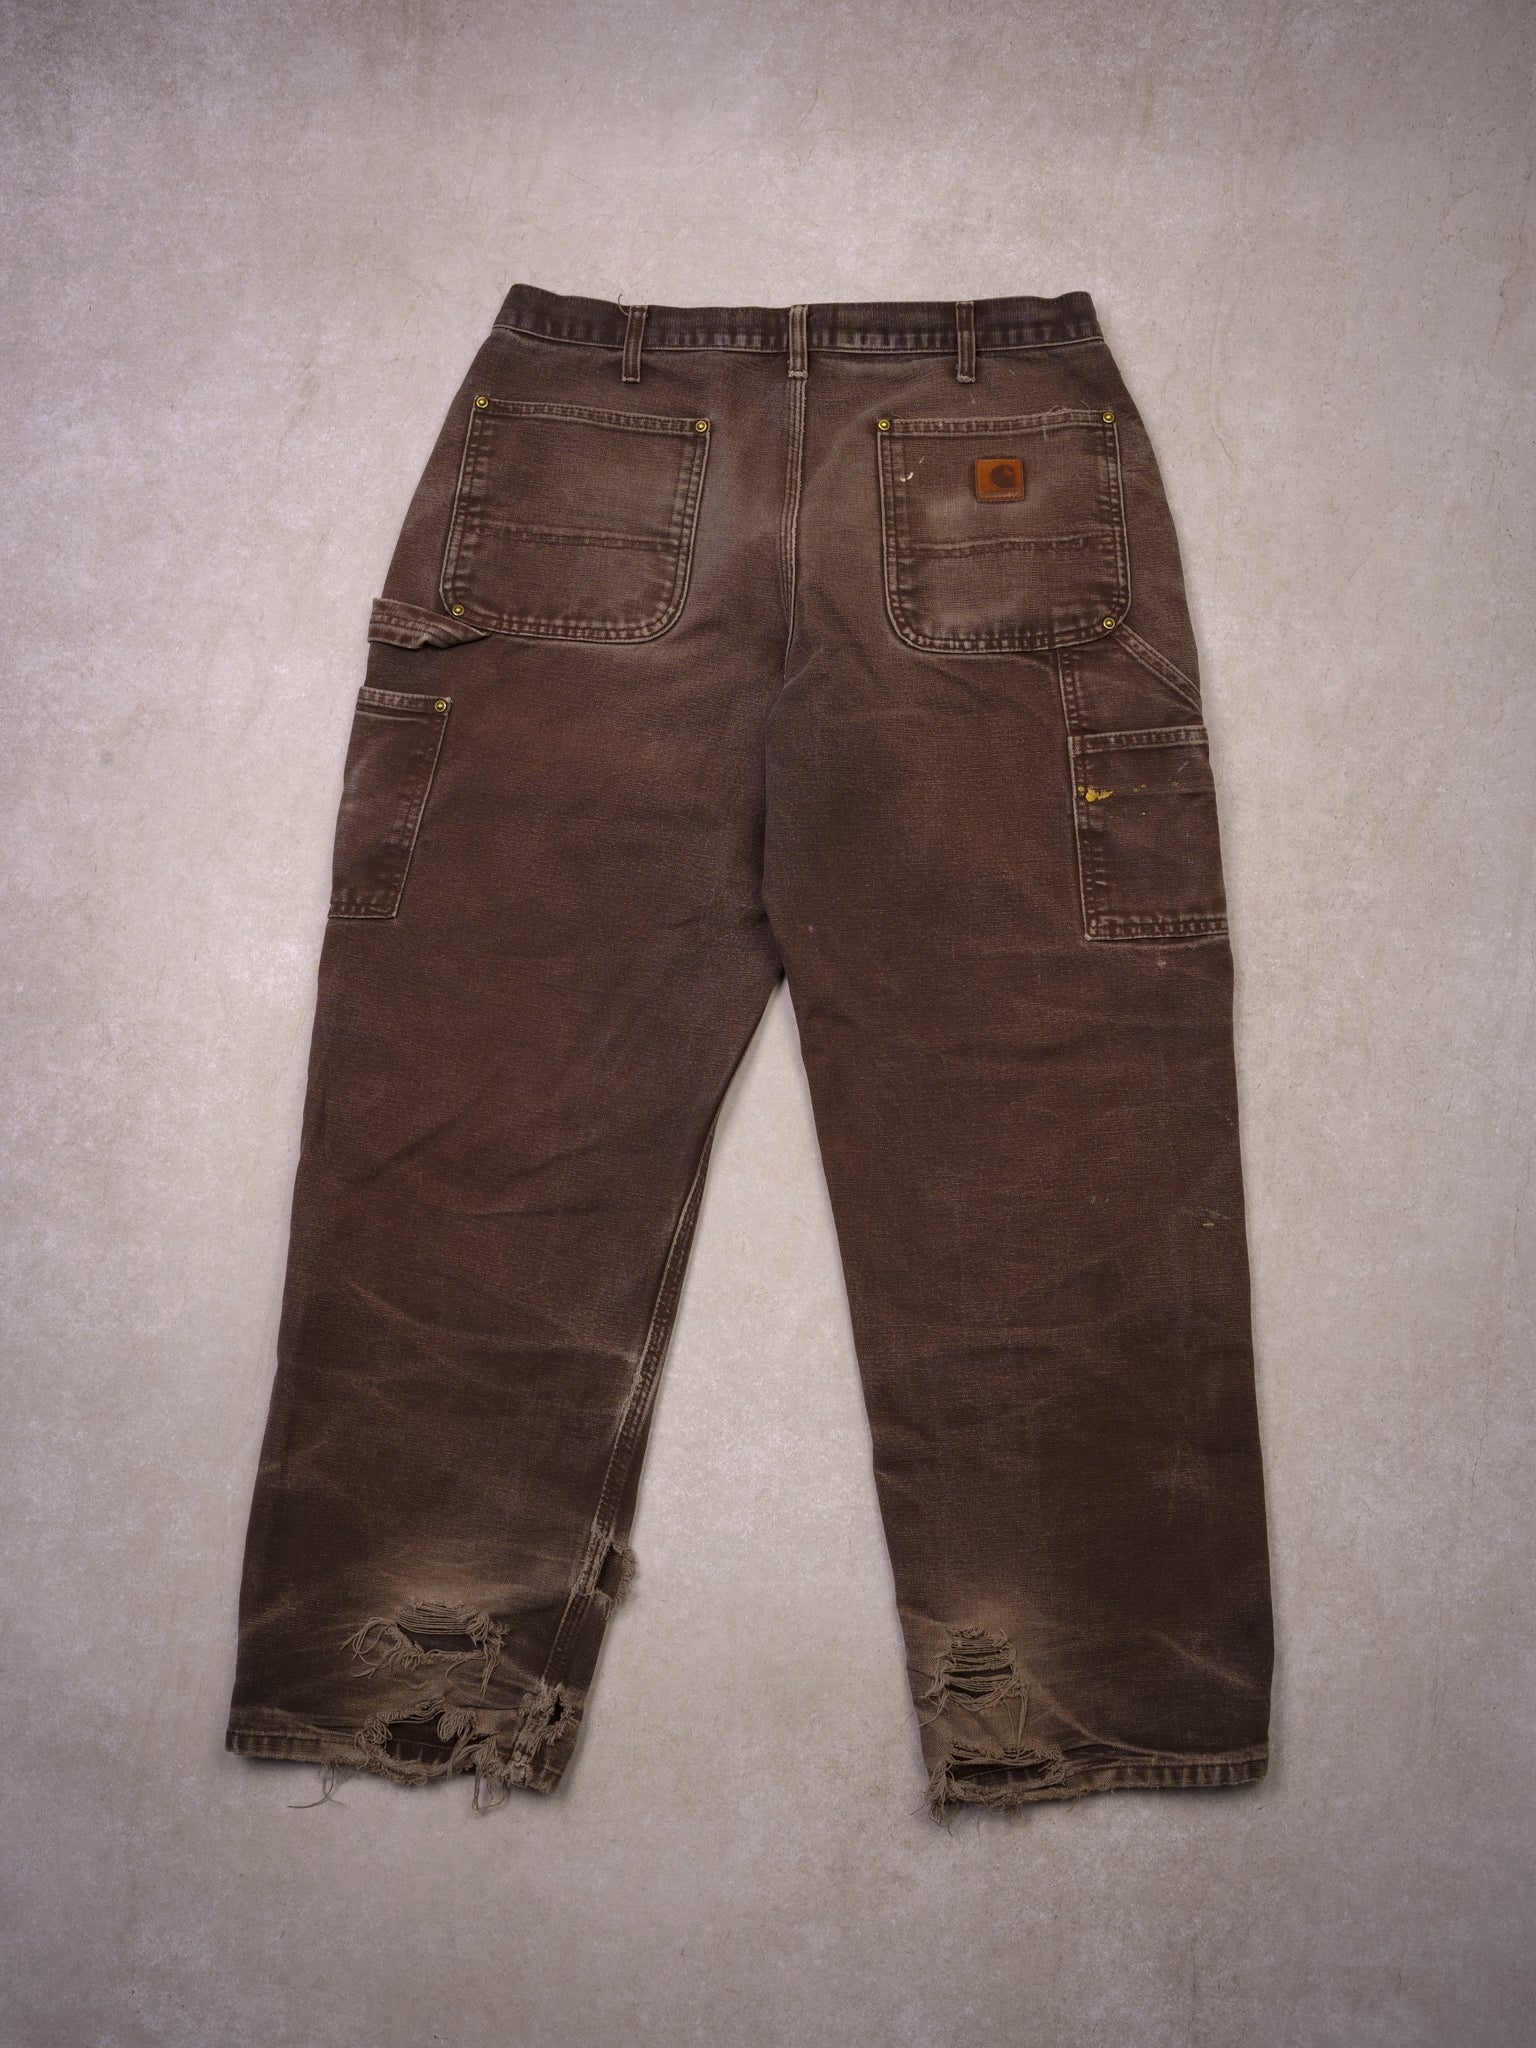 Vintage 90s Brown Double Knee Carhartt Original Fit Carpenter Pants (34x30)